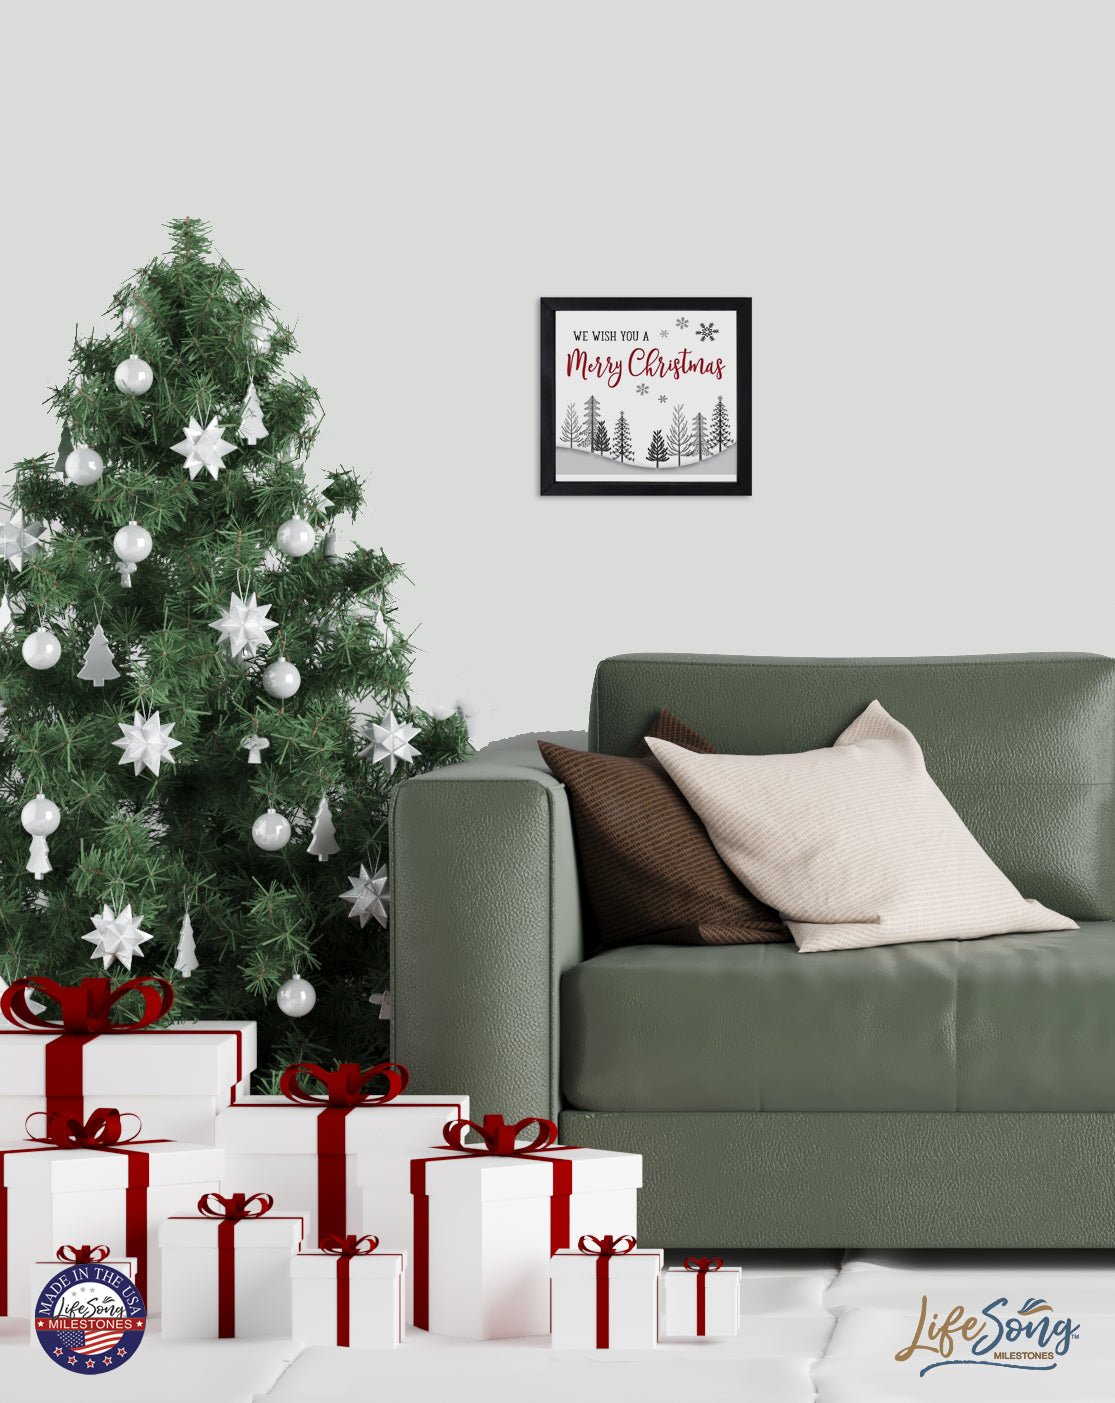 Christmas Shelf Décor - We Wish You a Merry Christmas - LifeSong Milestones